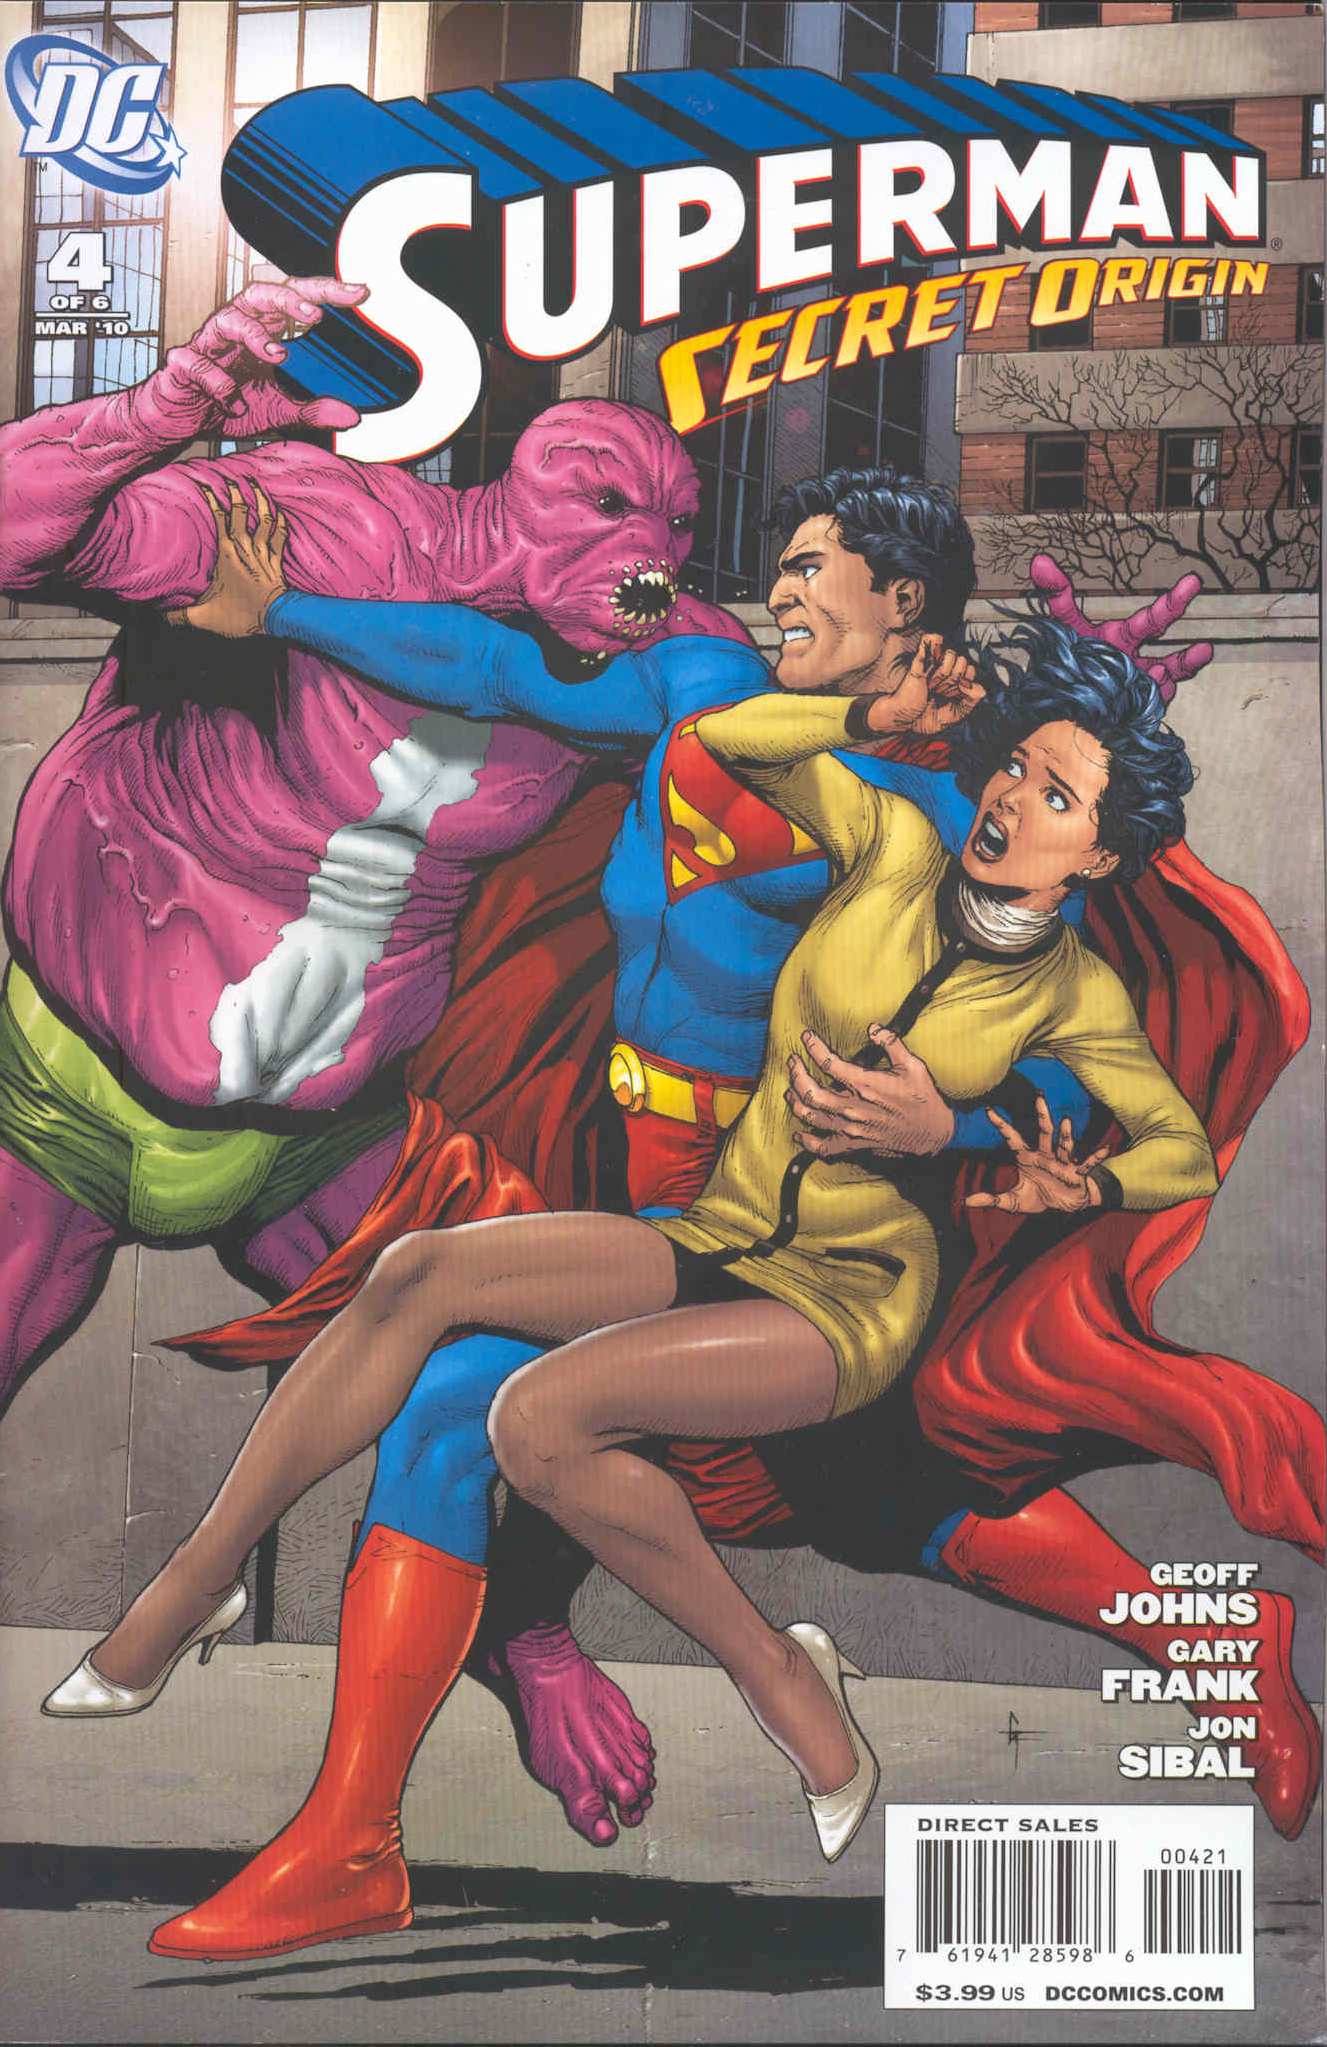 SUPERMAN SECRET ORIGINS #4